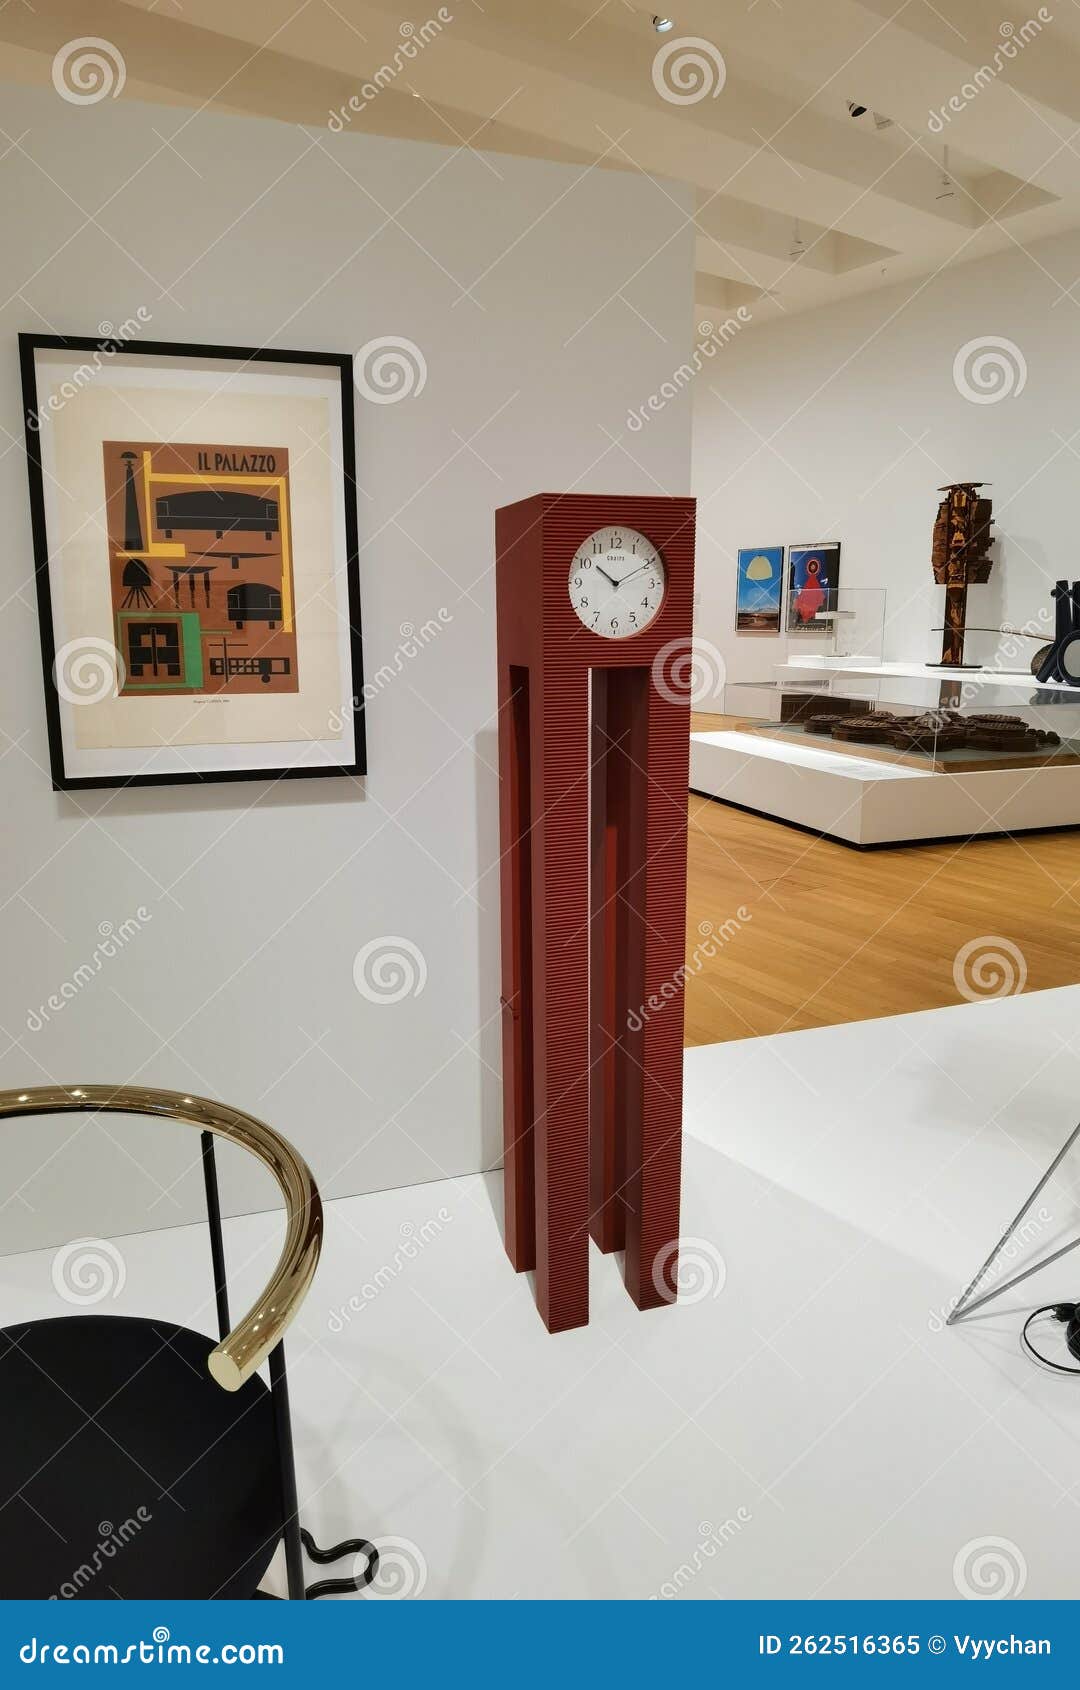 Hong Kong M Plus Museum Antique Designer Furniture Clock Tower ...